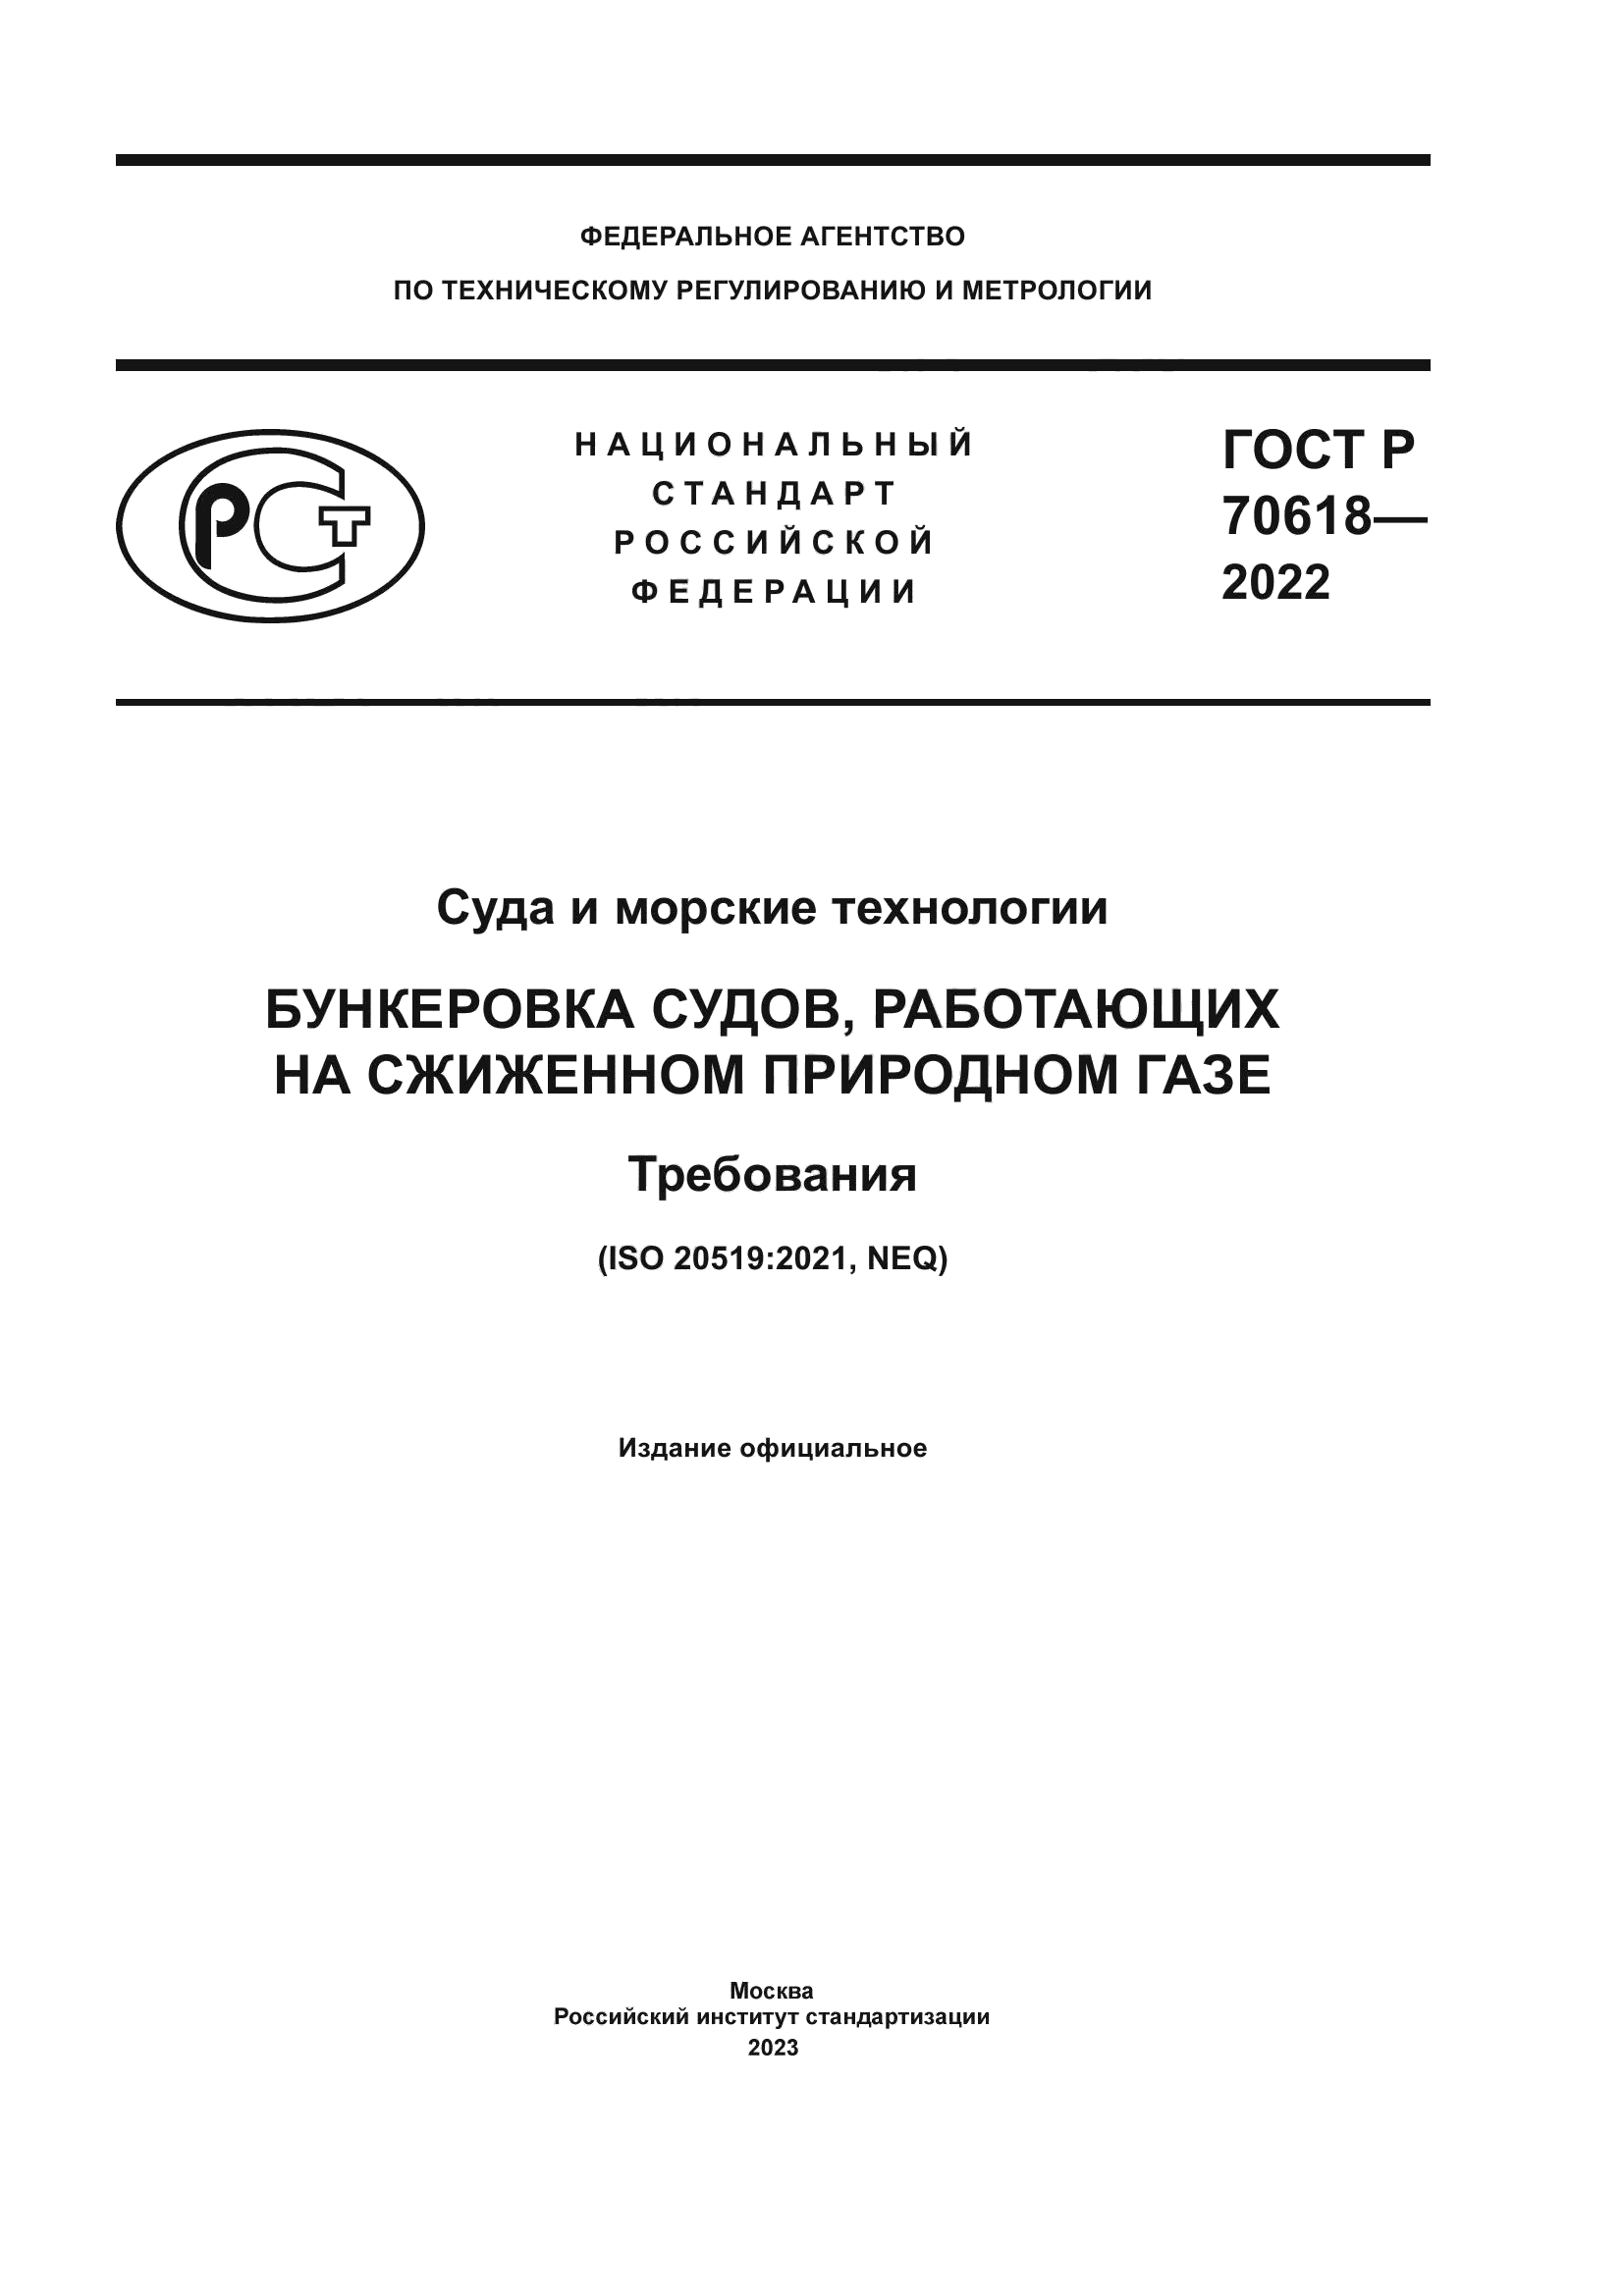 ГОСТ Р 70618-2022